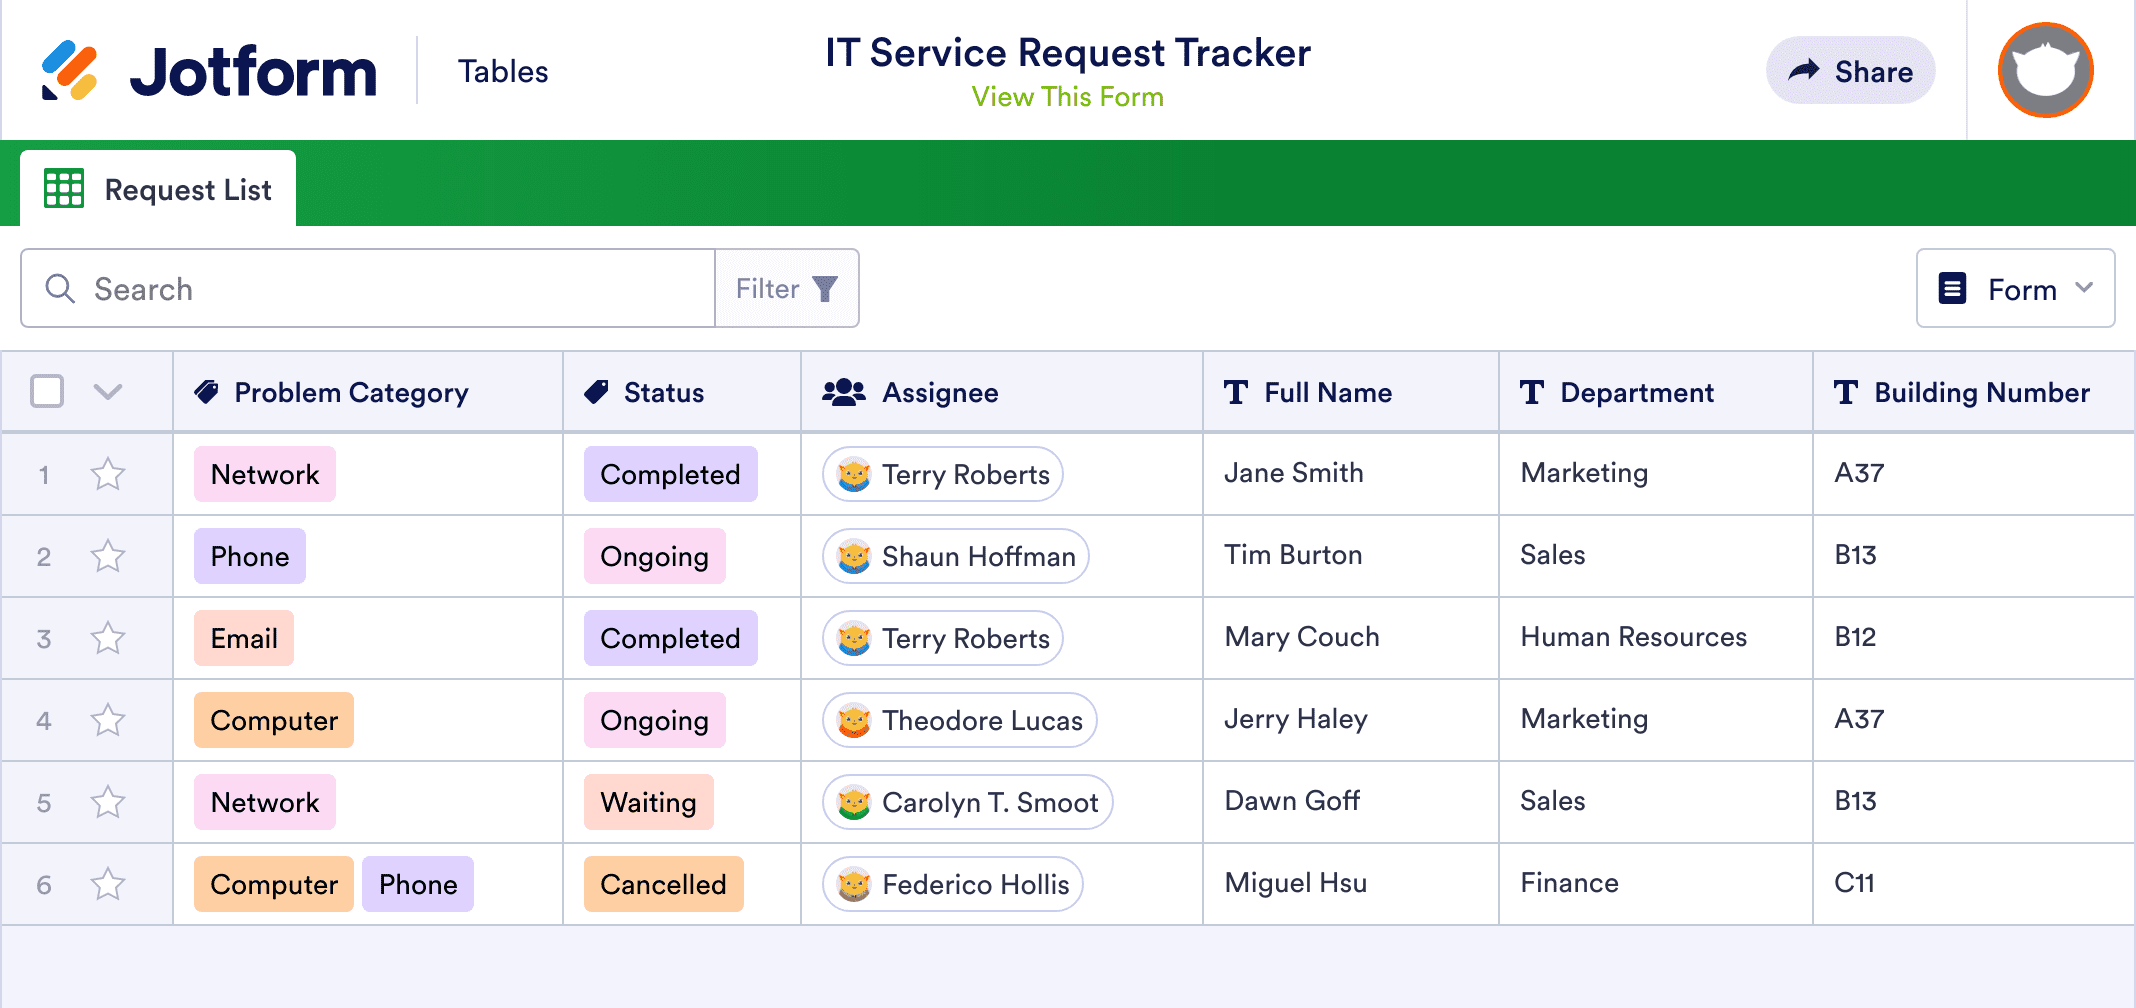 IT Service Request Tracker